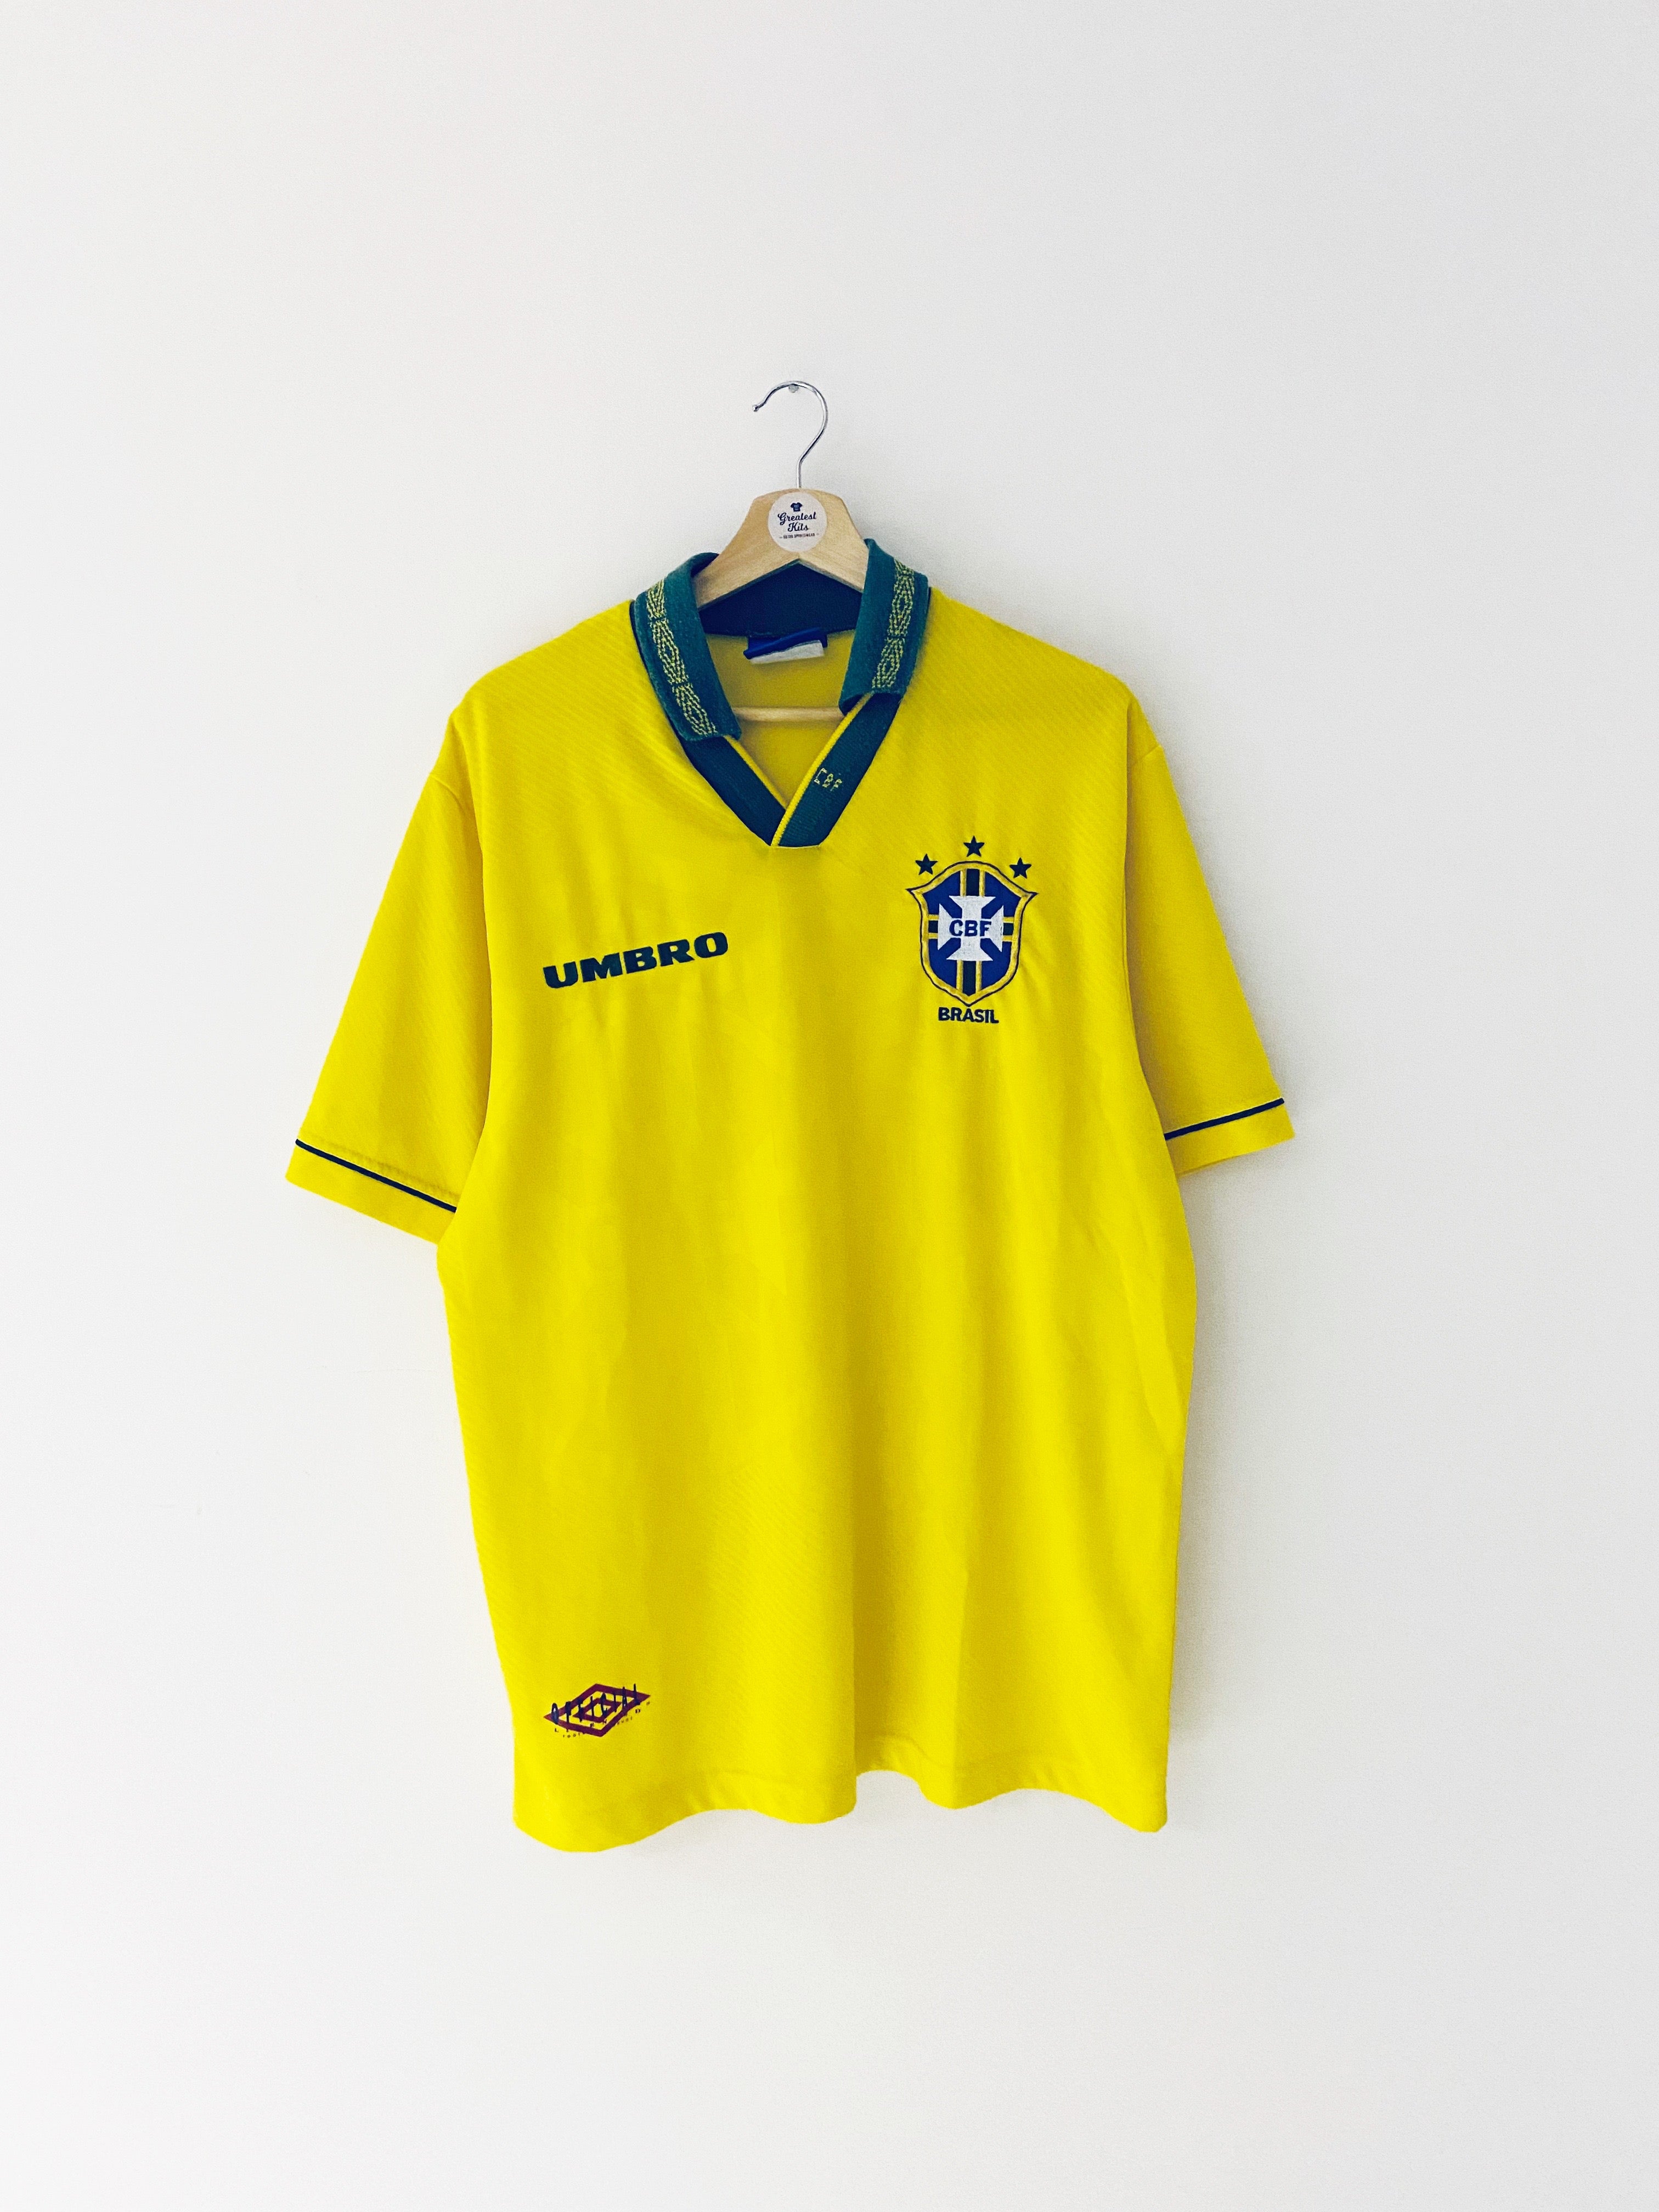 1993/94 Brazil Home Shirt (L) 8.5/10